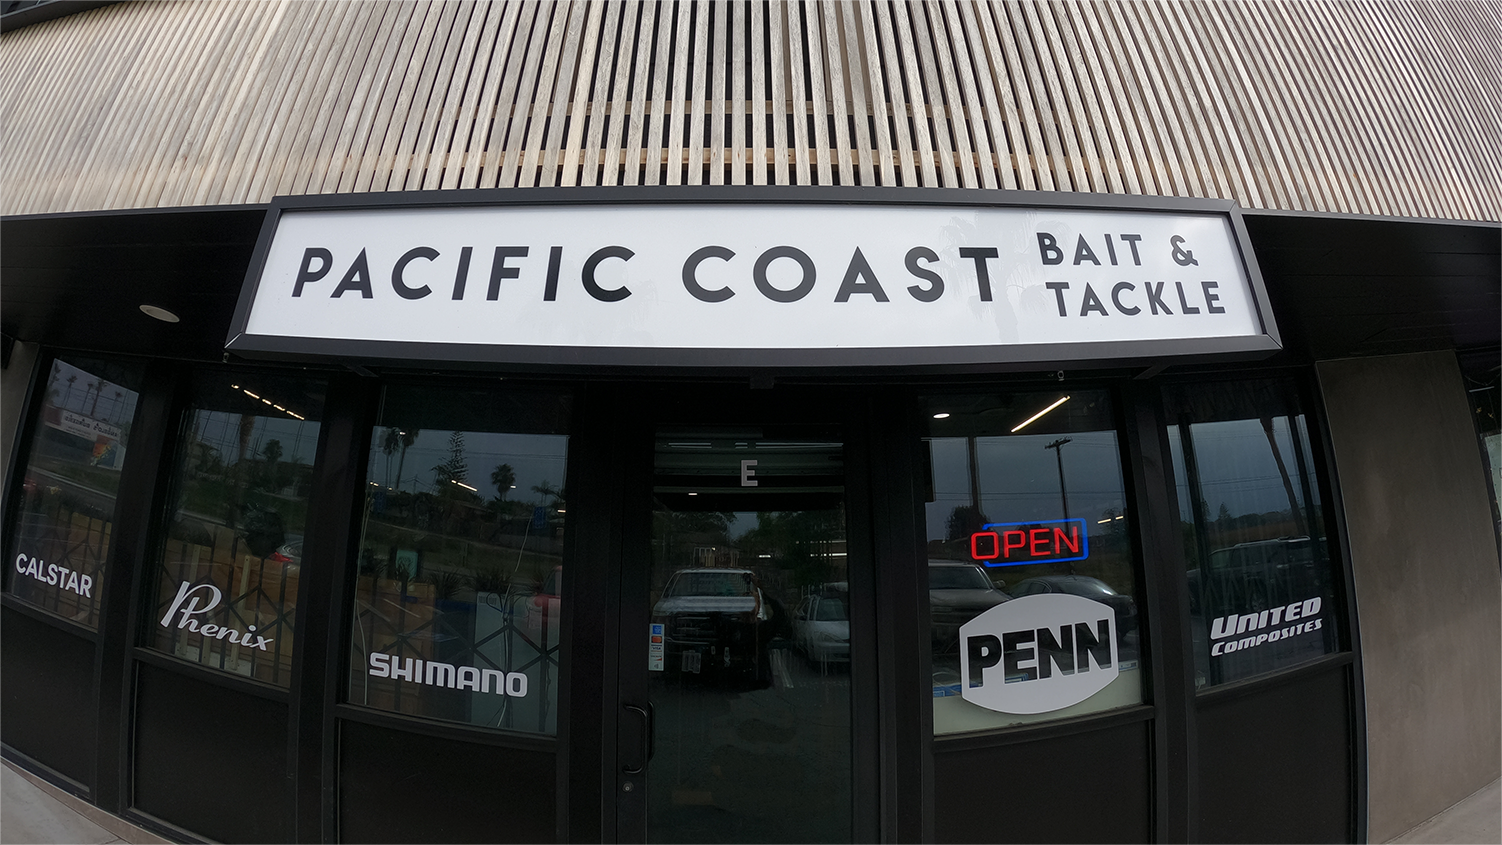 Pacific Coast Bait and Tackle  Oceanside, California –  pacificcoastbaitandtackle